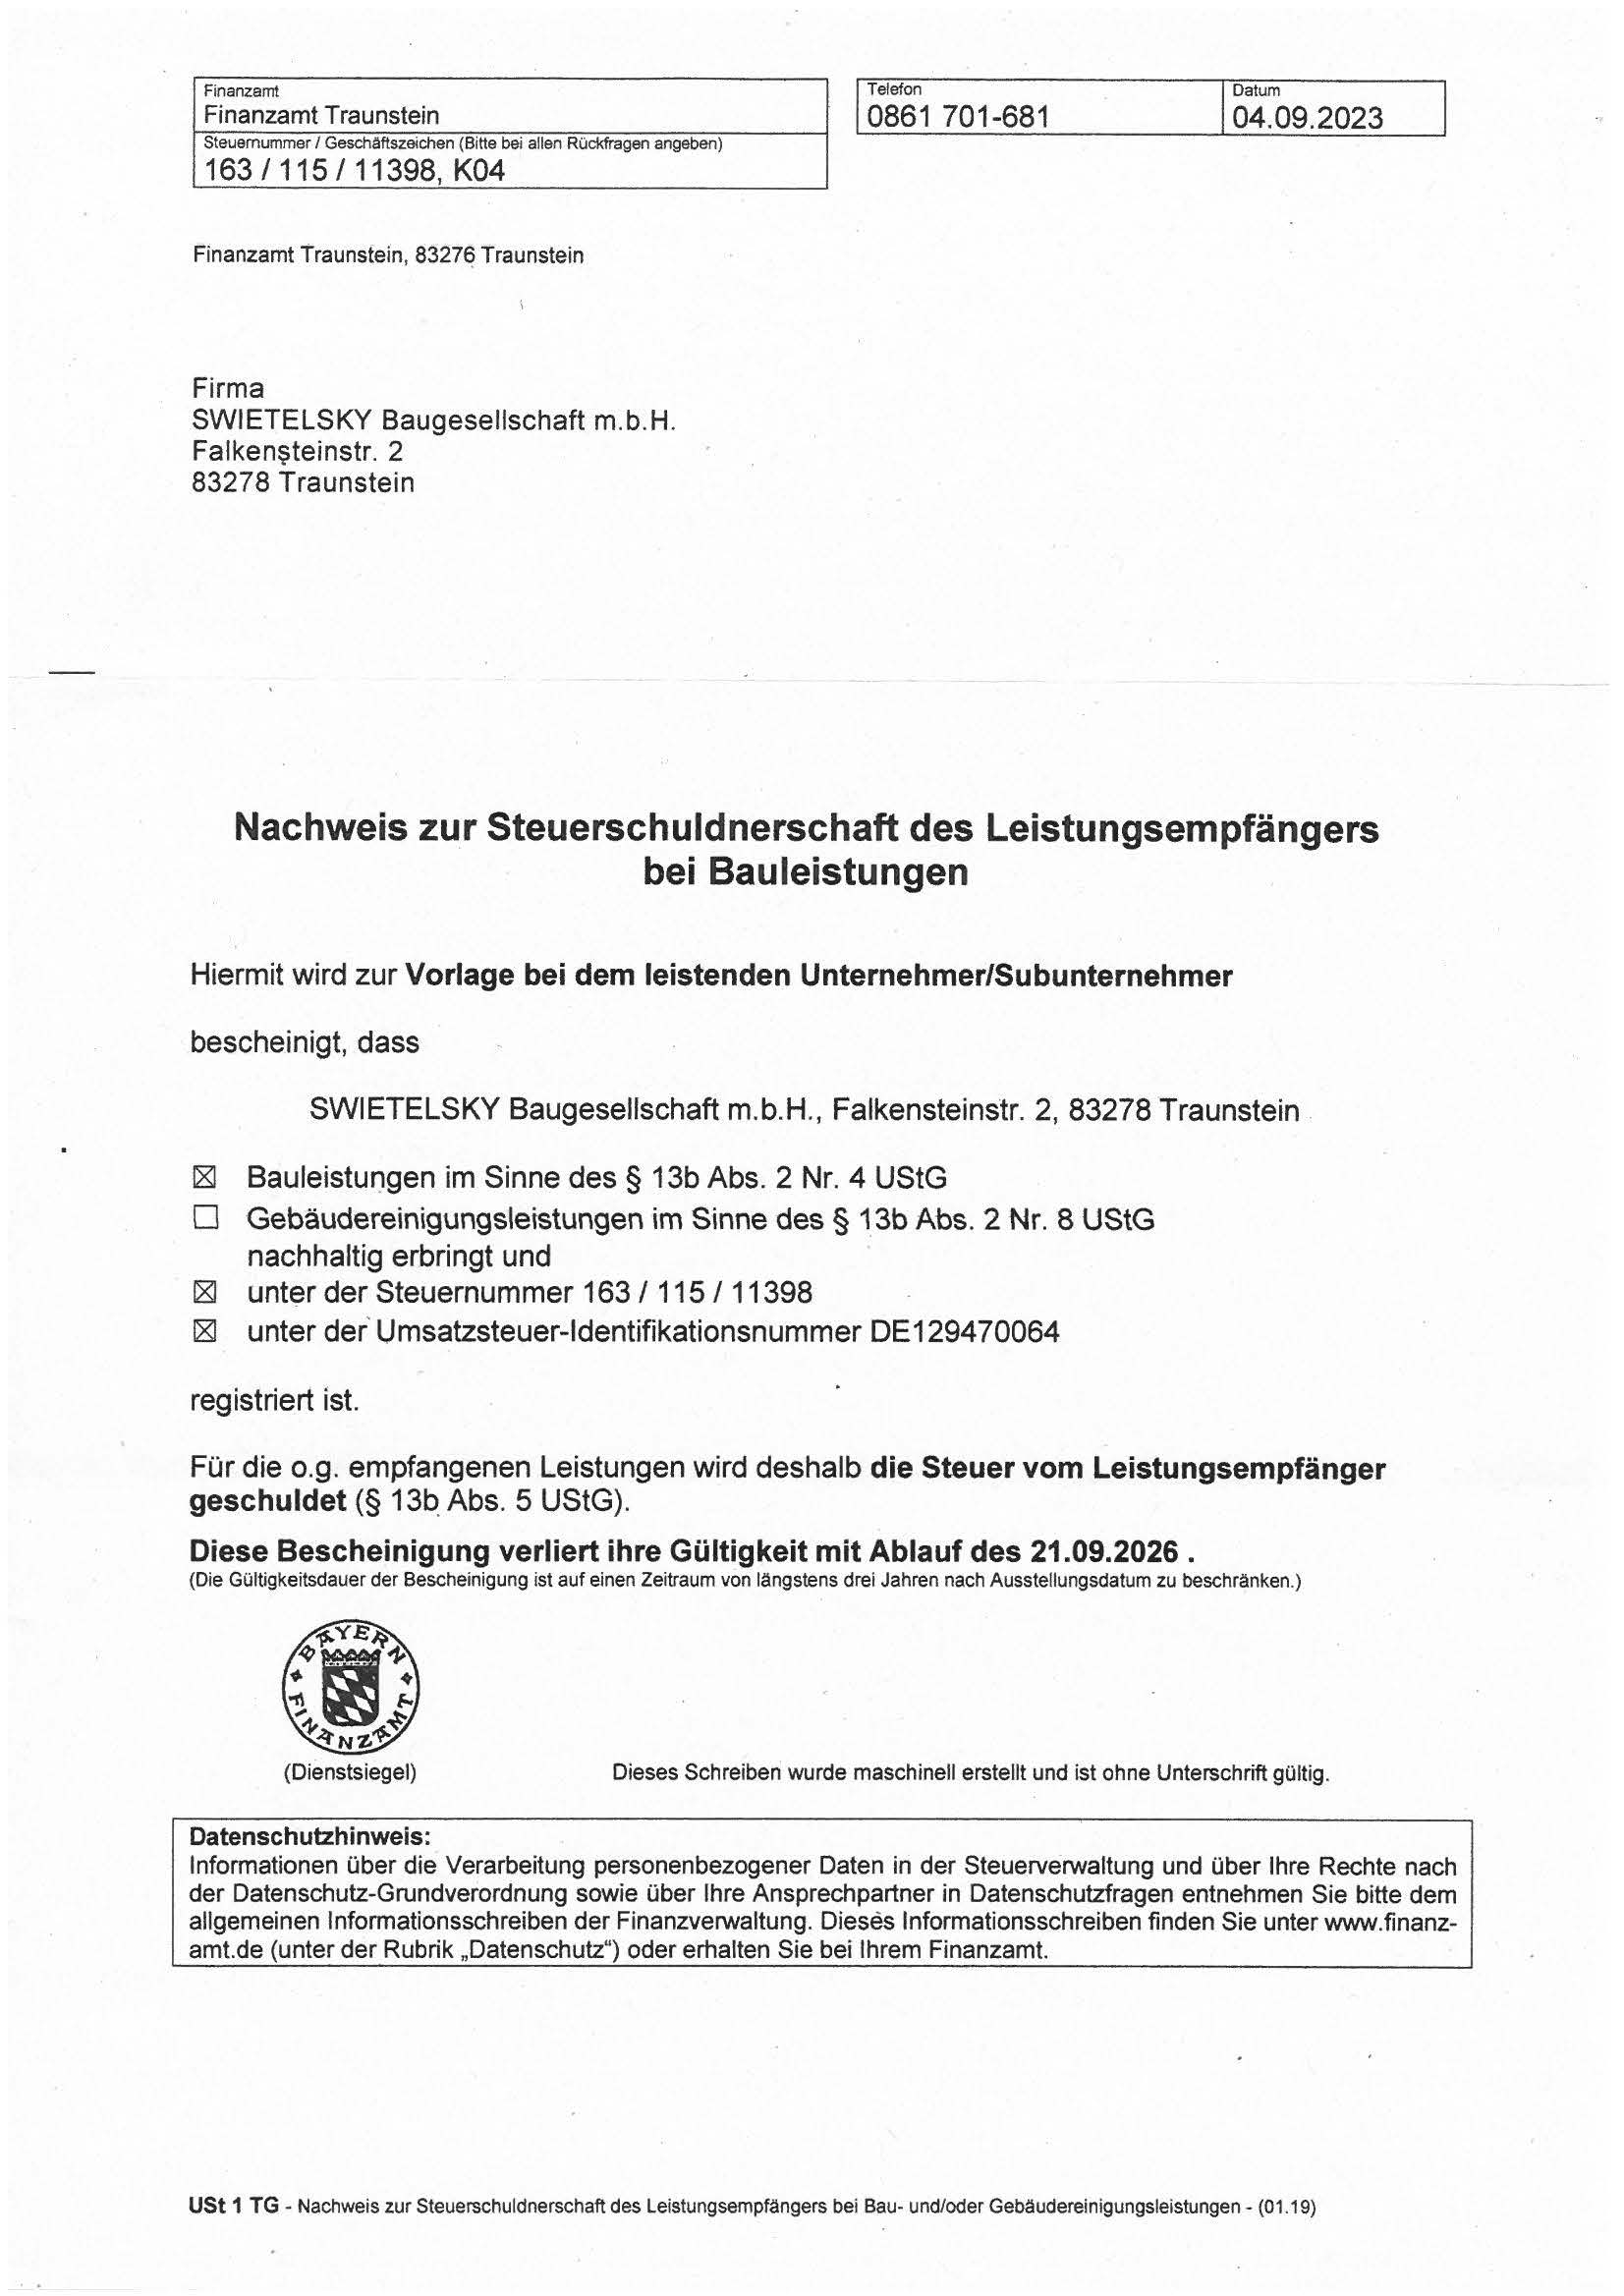 Nachweis Steuerschuldnerschaft Bauleistungen 21.09.2026 Swietelsky Baugesmbh (1)